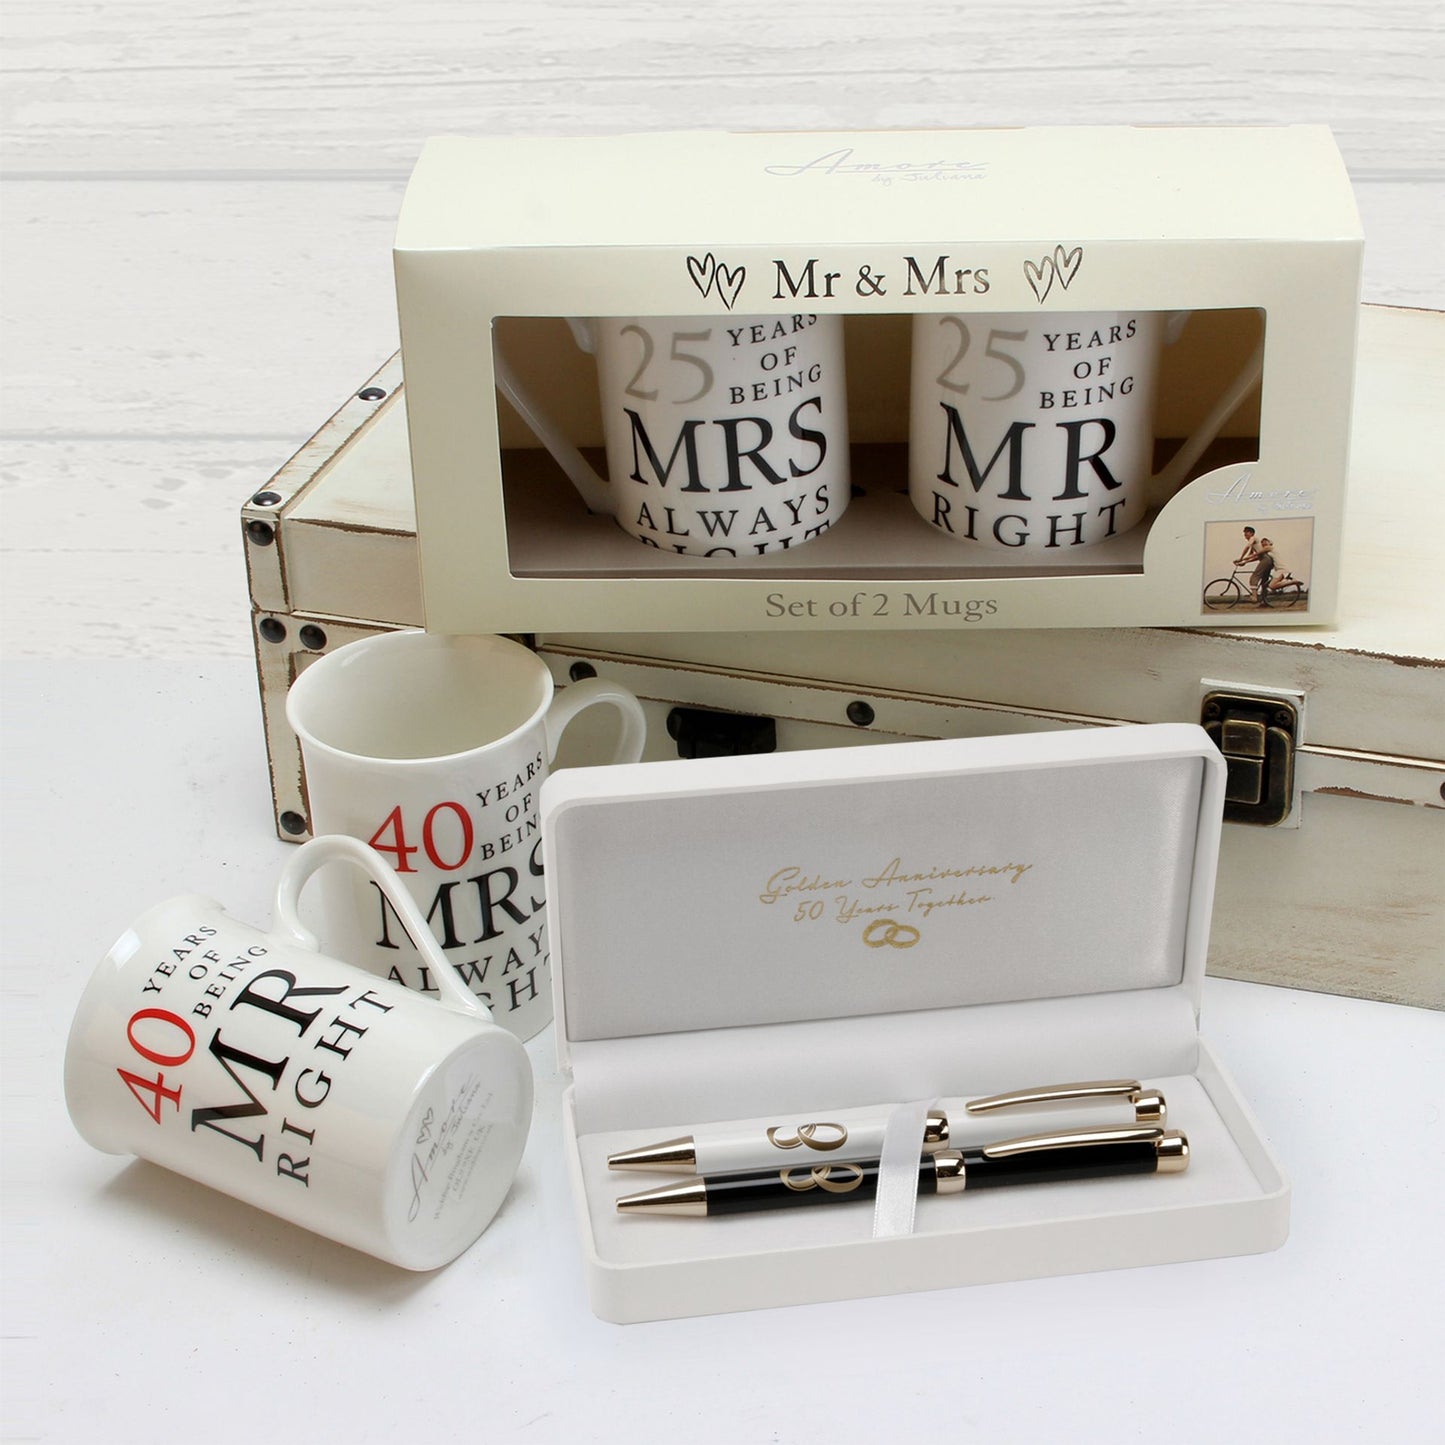 Mug Set - 10th Anniversary Gift - 2 Coffee Mugs "Mr Right & Mrs Always Right"